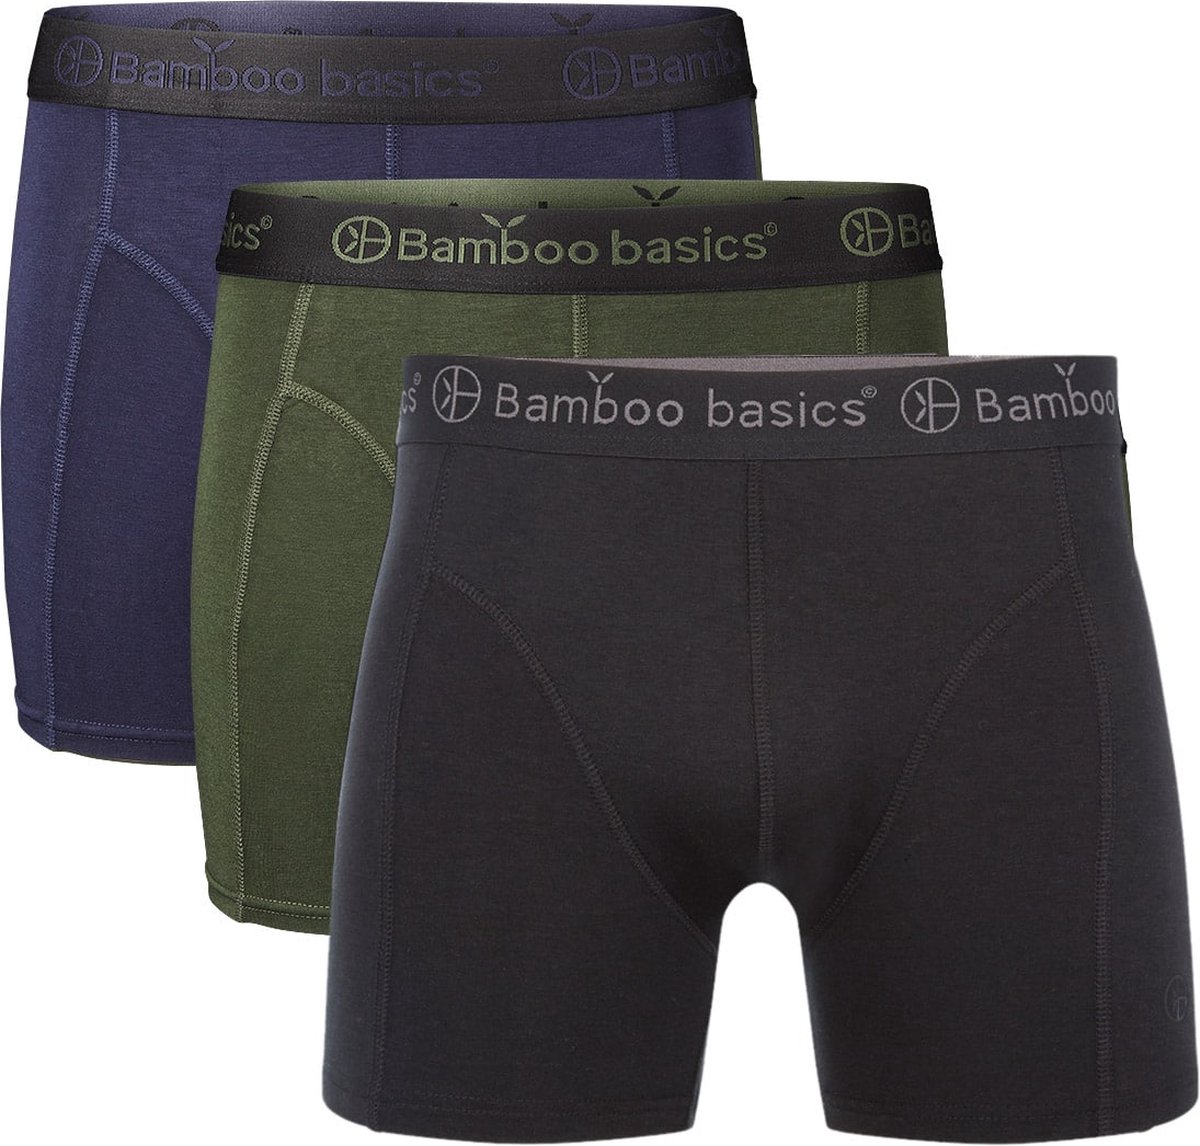 Comfortabel & Zijdezacht Bamboo Basics Rico - Bamboe Boxershorts Heren (Multipack 3 stuks) - Onderbroek - Ondergoed - Navy, Army & Zwart - L - Bamboo Basics